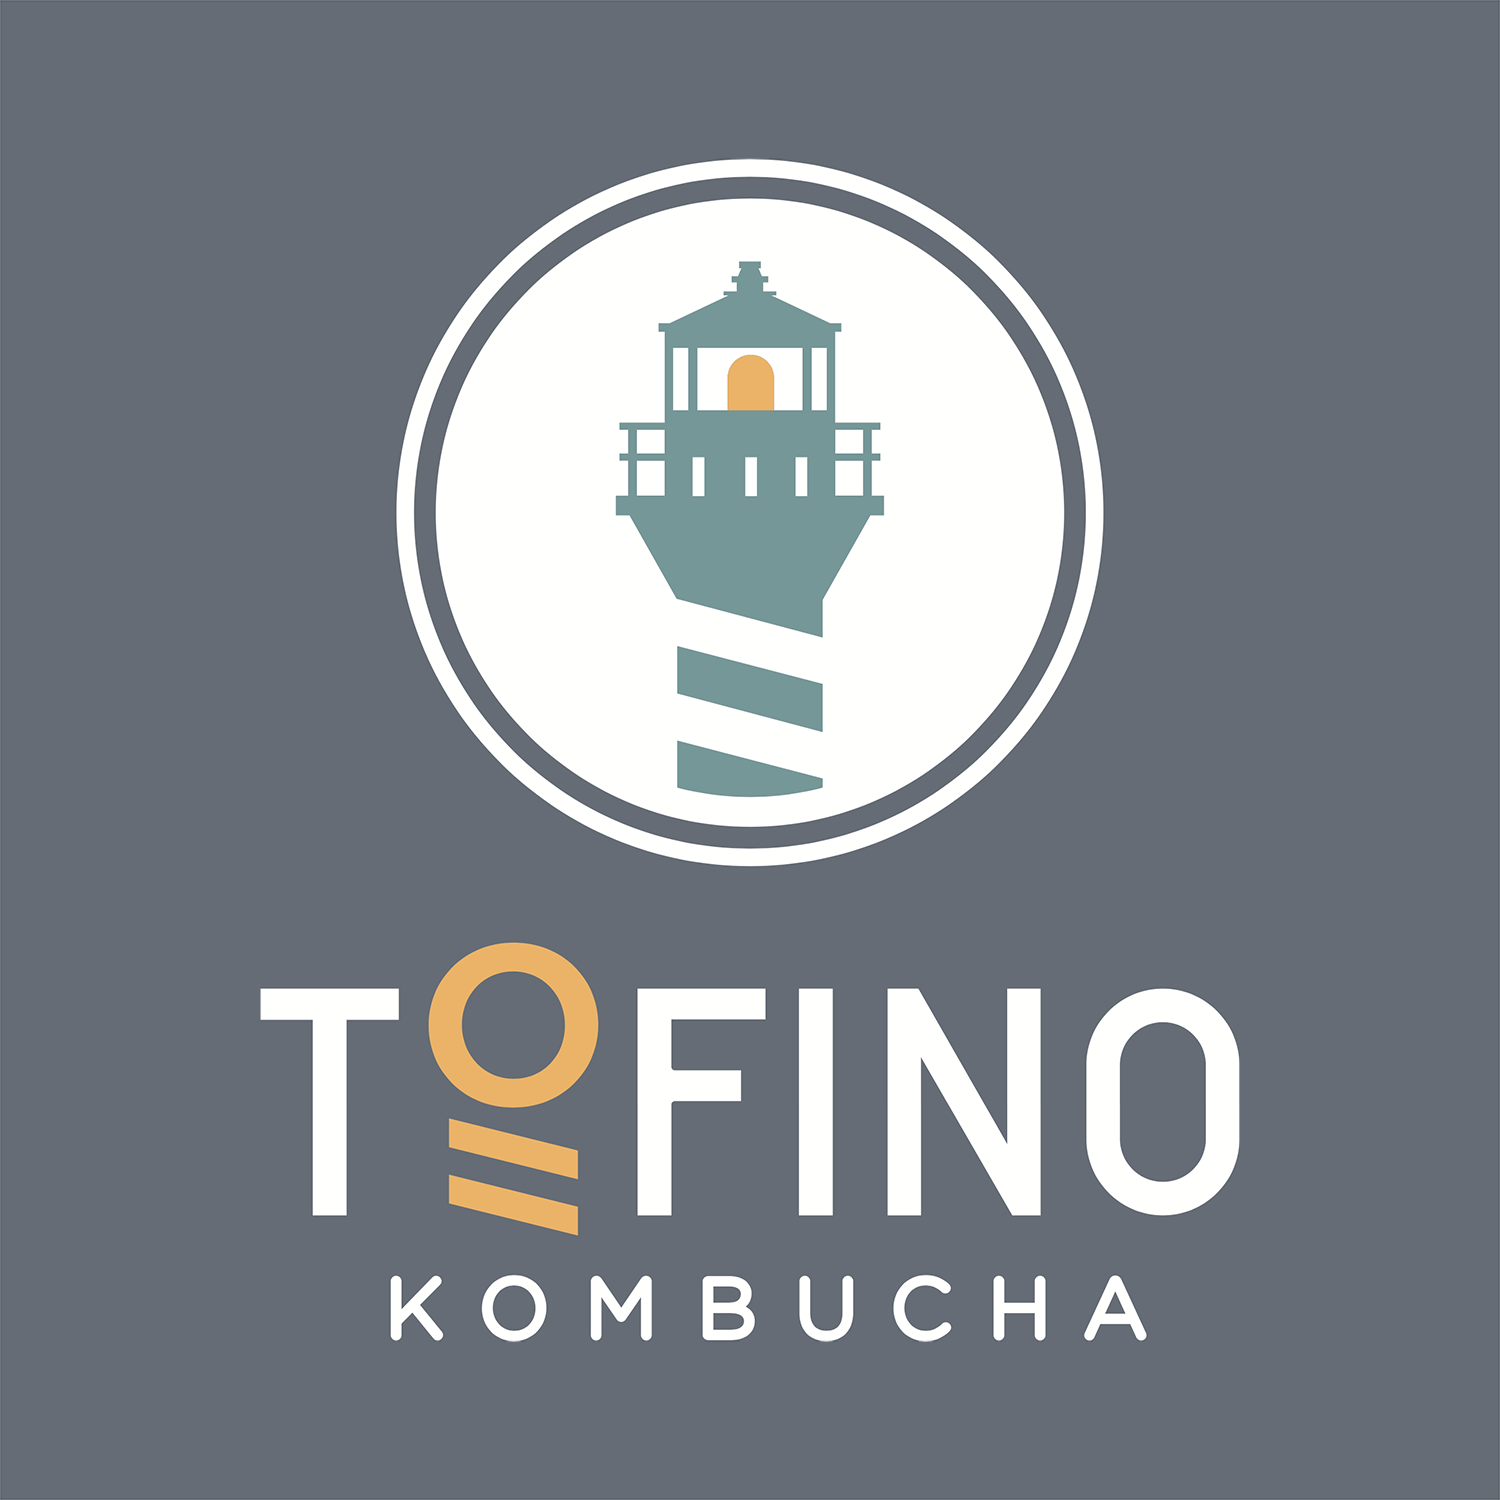 Tofino Kombucha logo